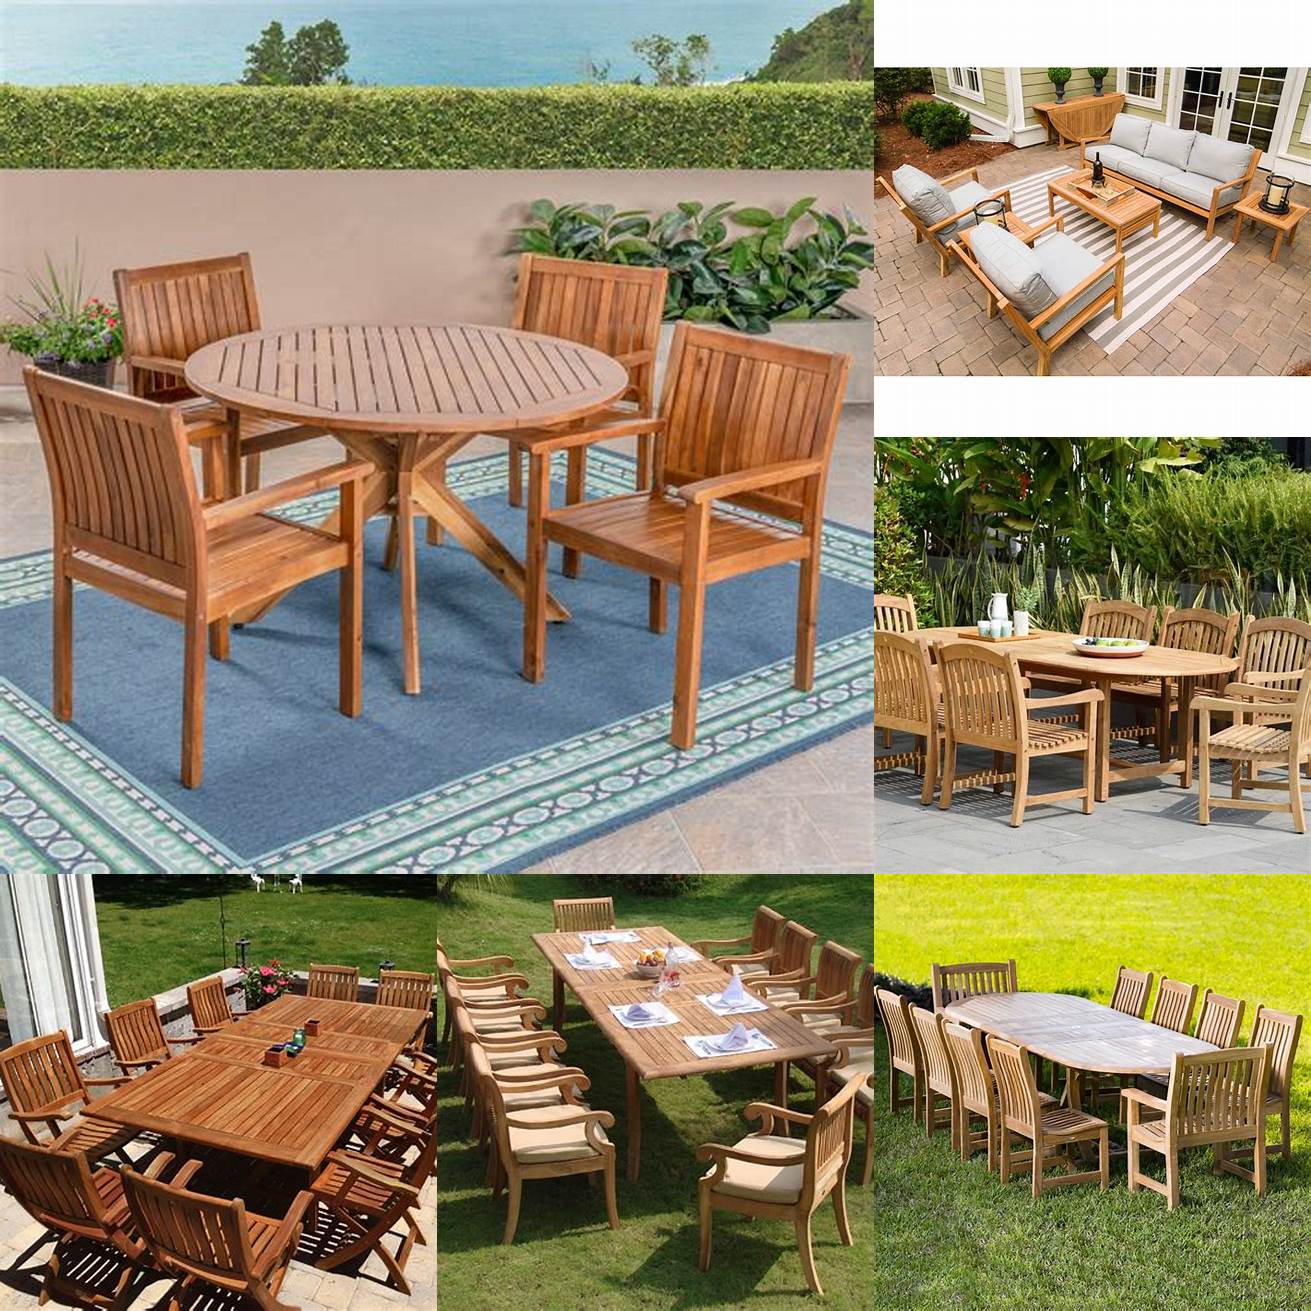 Teak outdoor furniture on a deck